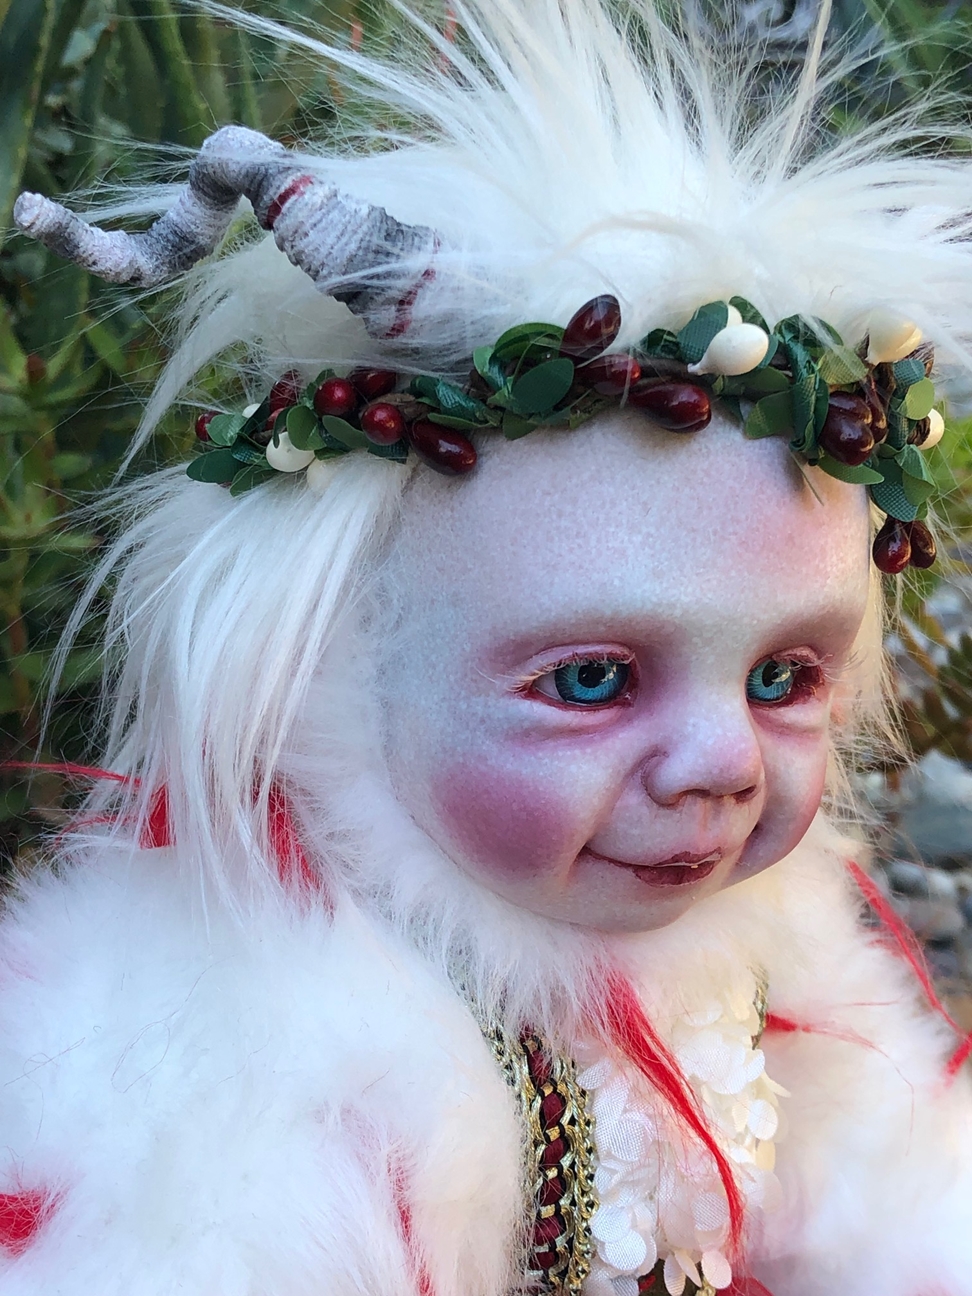 close-up mixed media artdoll holiday elf girl wearing red and white velvet fur trimmed dirndl dress, floral crown